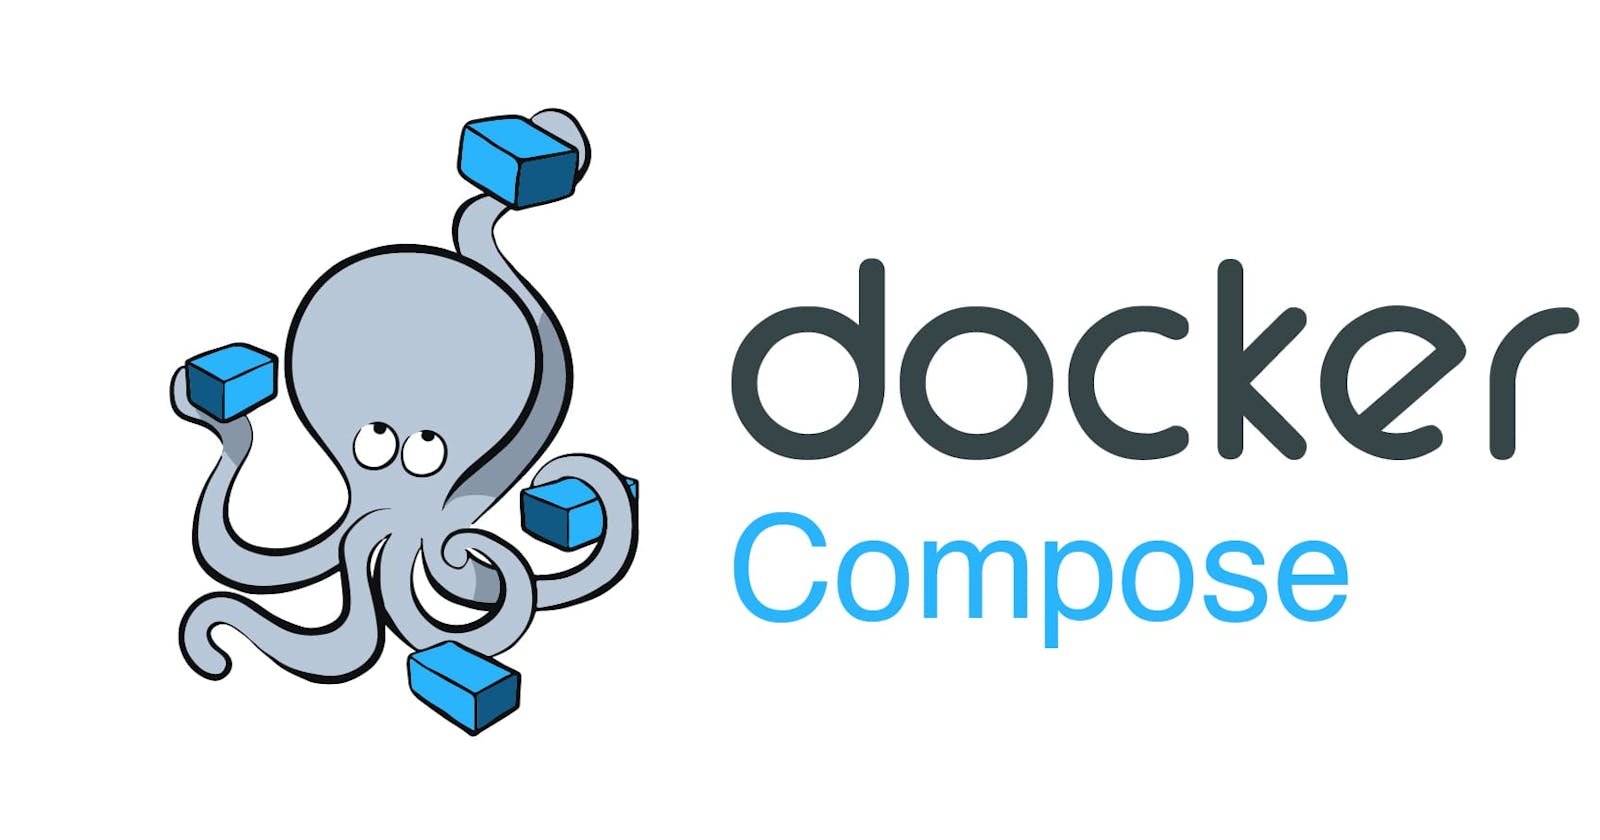 Docker Compose overview